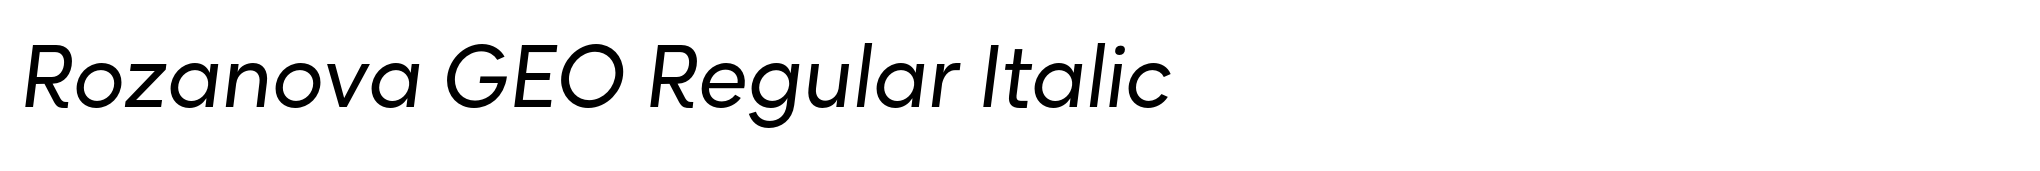 Rozanova GEO Regular Italic image